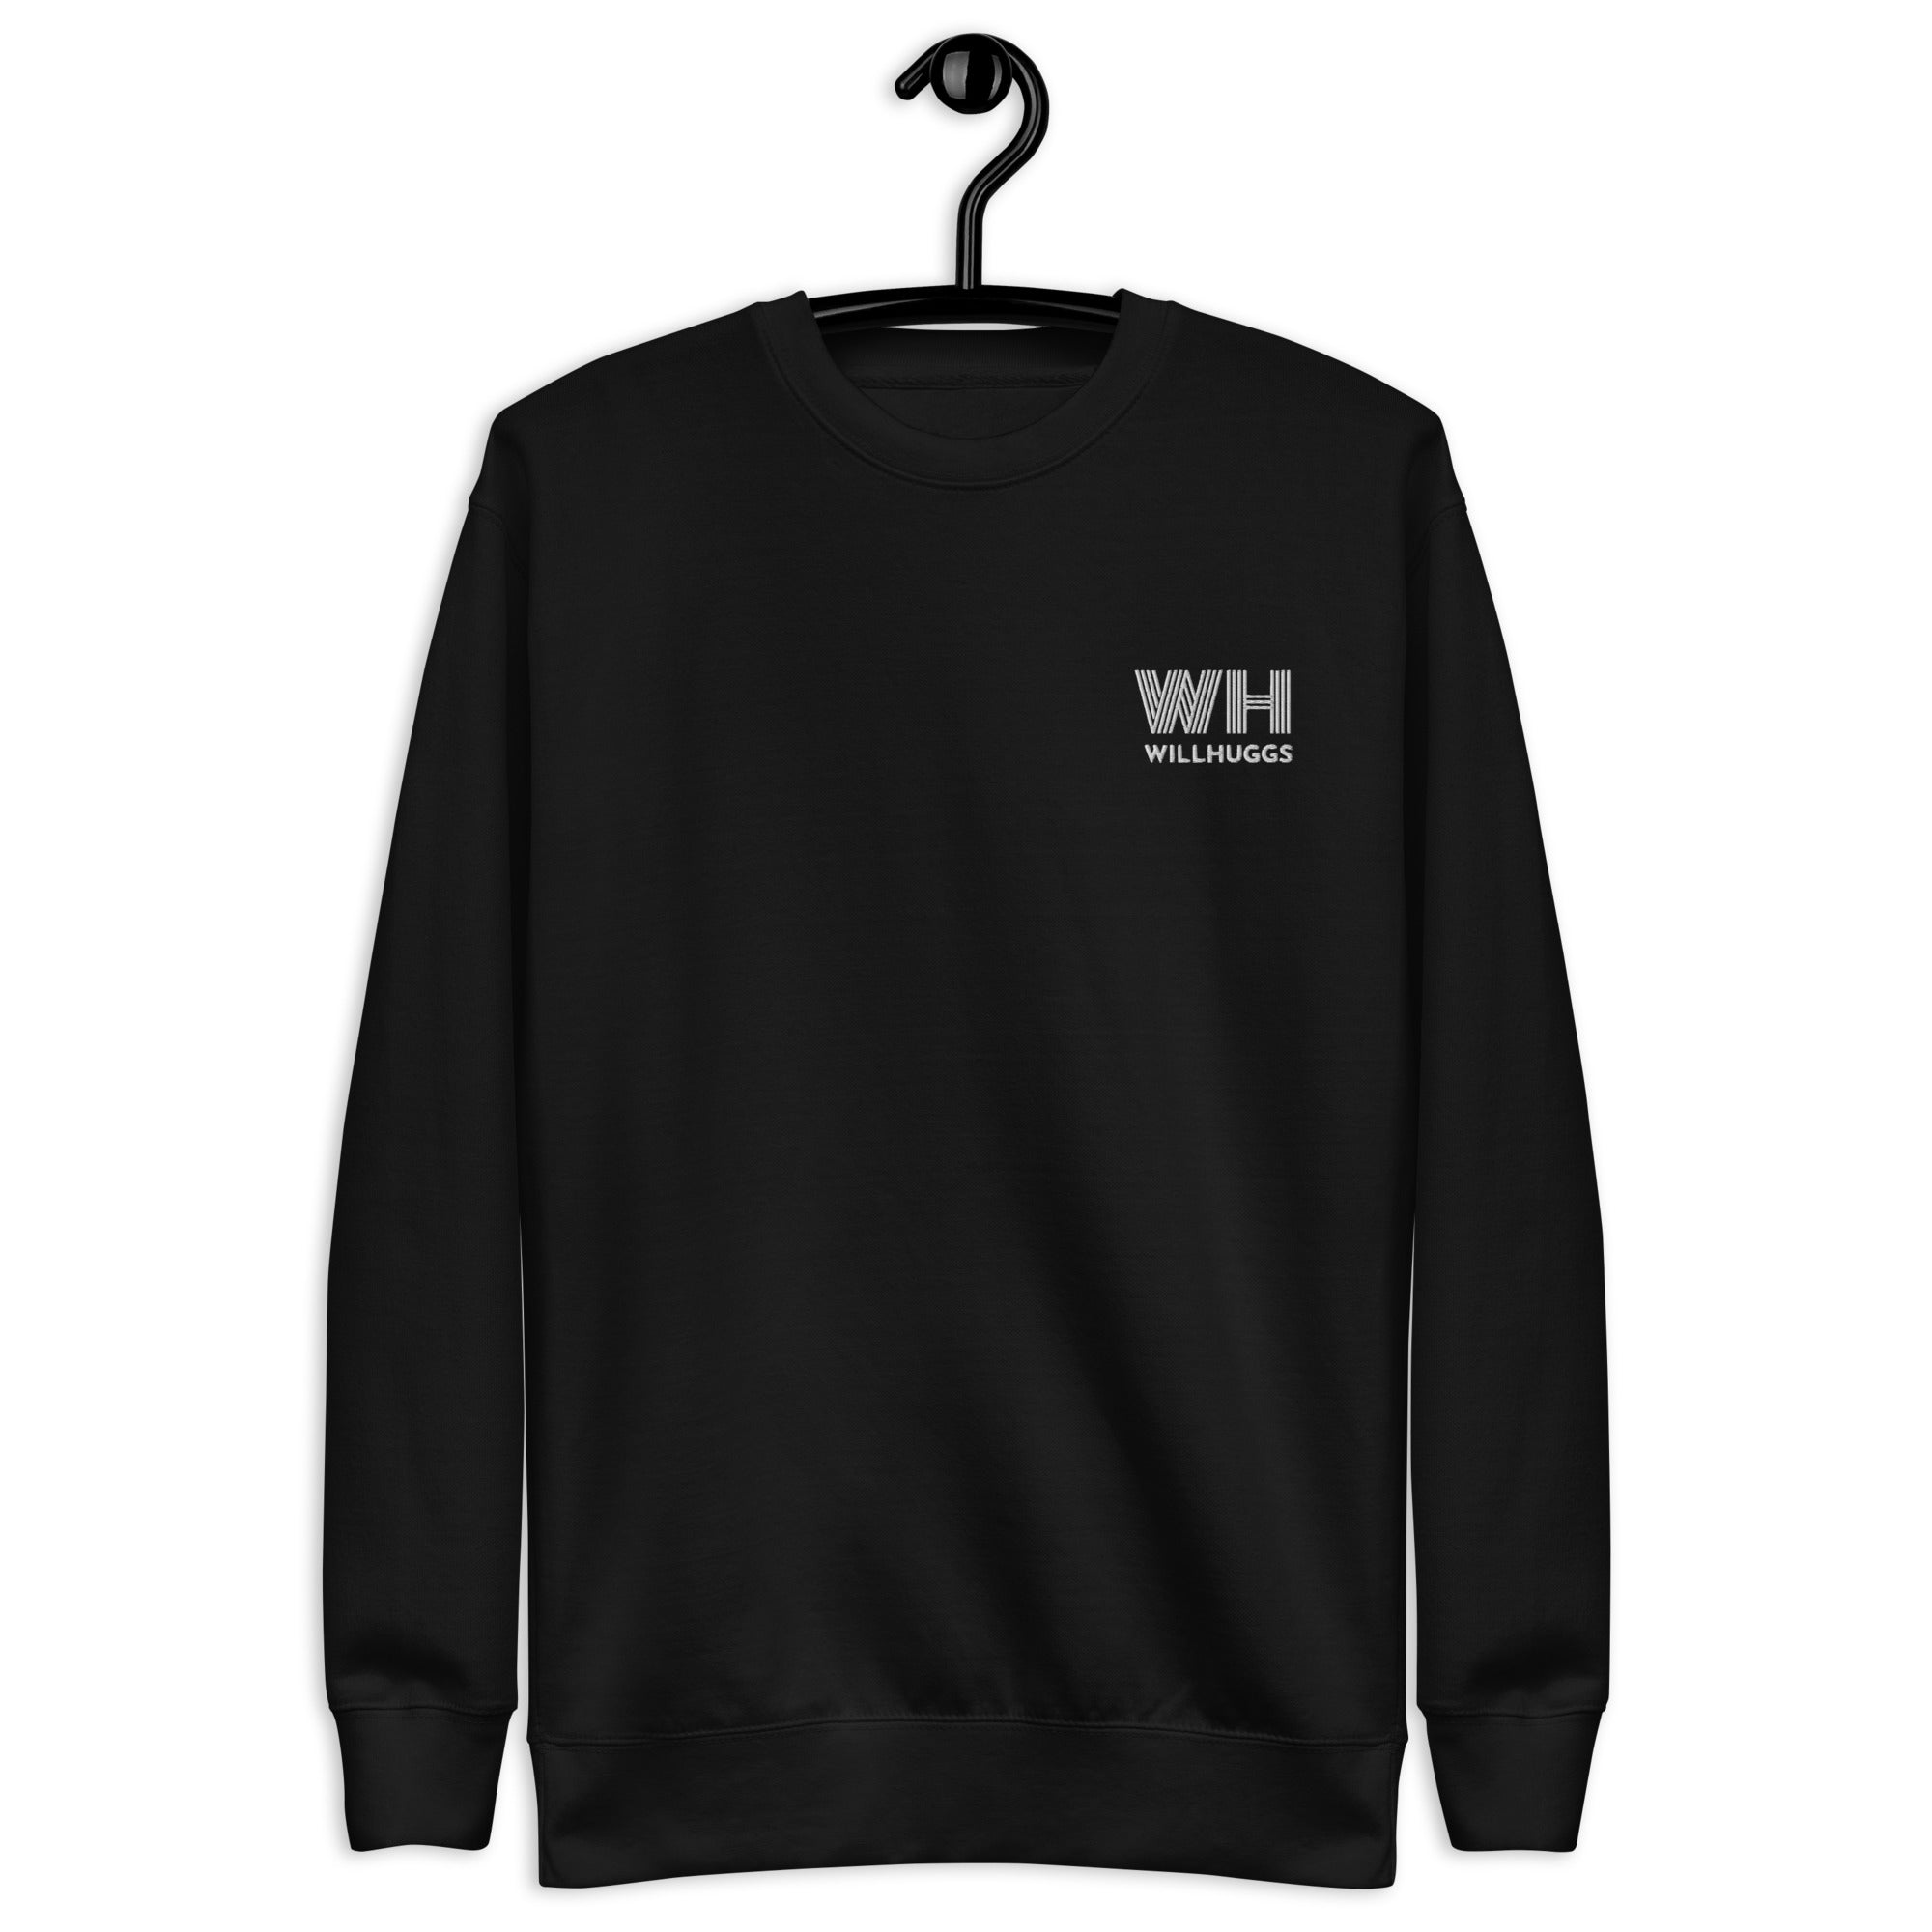 WillHuggs Logo Sweatshirt